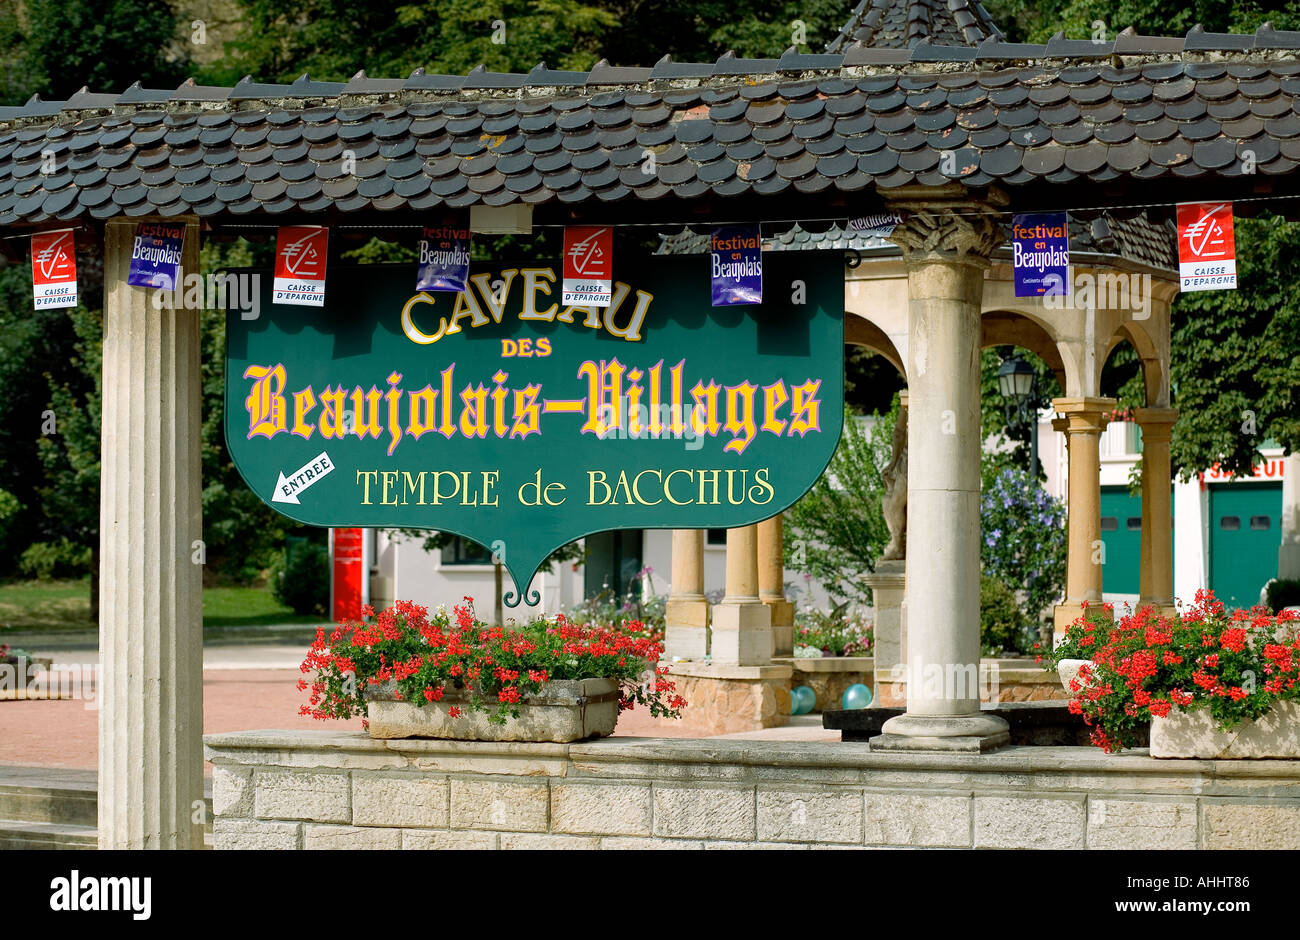 Caveau des Beaujolais-Villages, Temple de Bacchus, wine tasting cellar sign, Beaujeu, Beaujolais wine country, Rhone valley, France, Europe Stock Photo